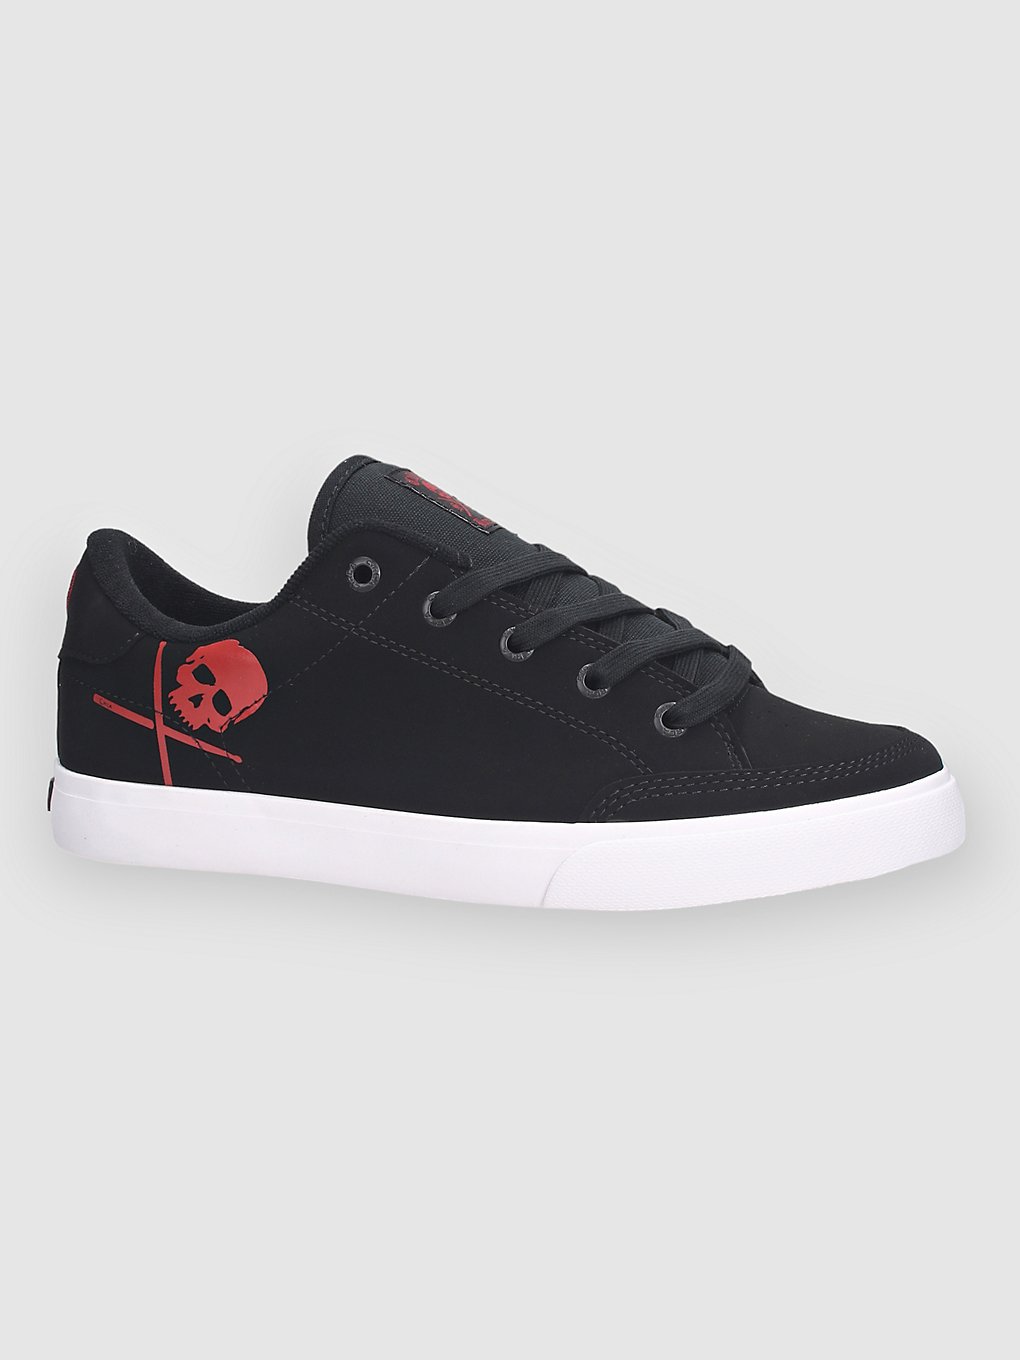 C1rca Buckler Sk Skate Shoes black red white kaufen